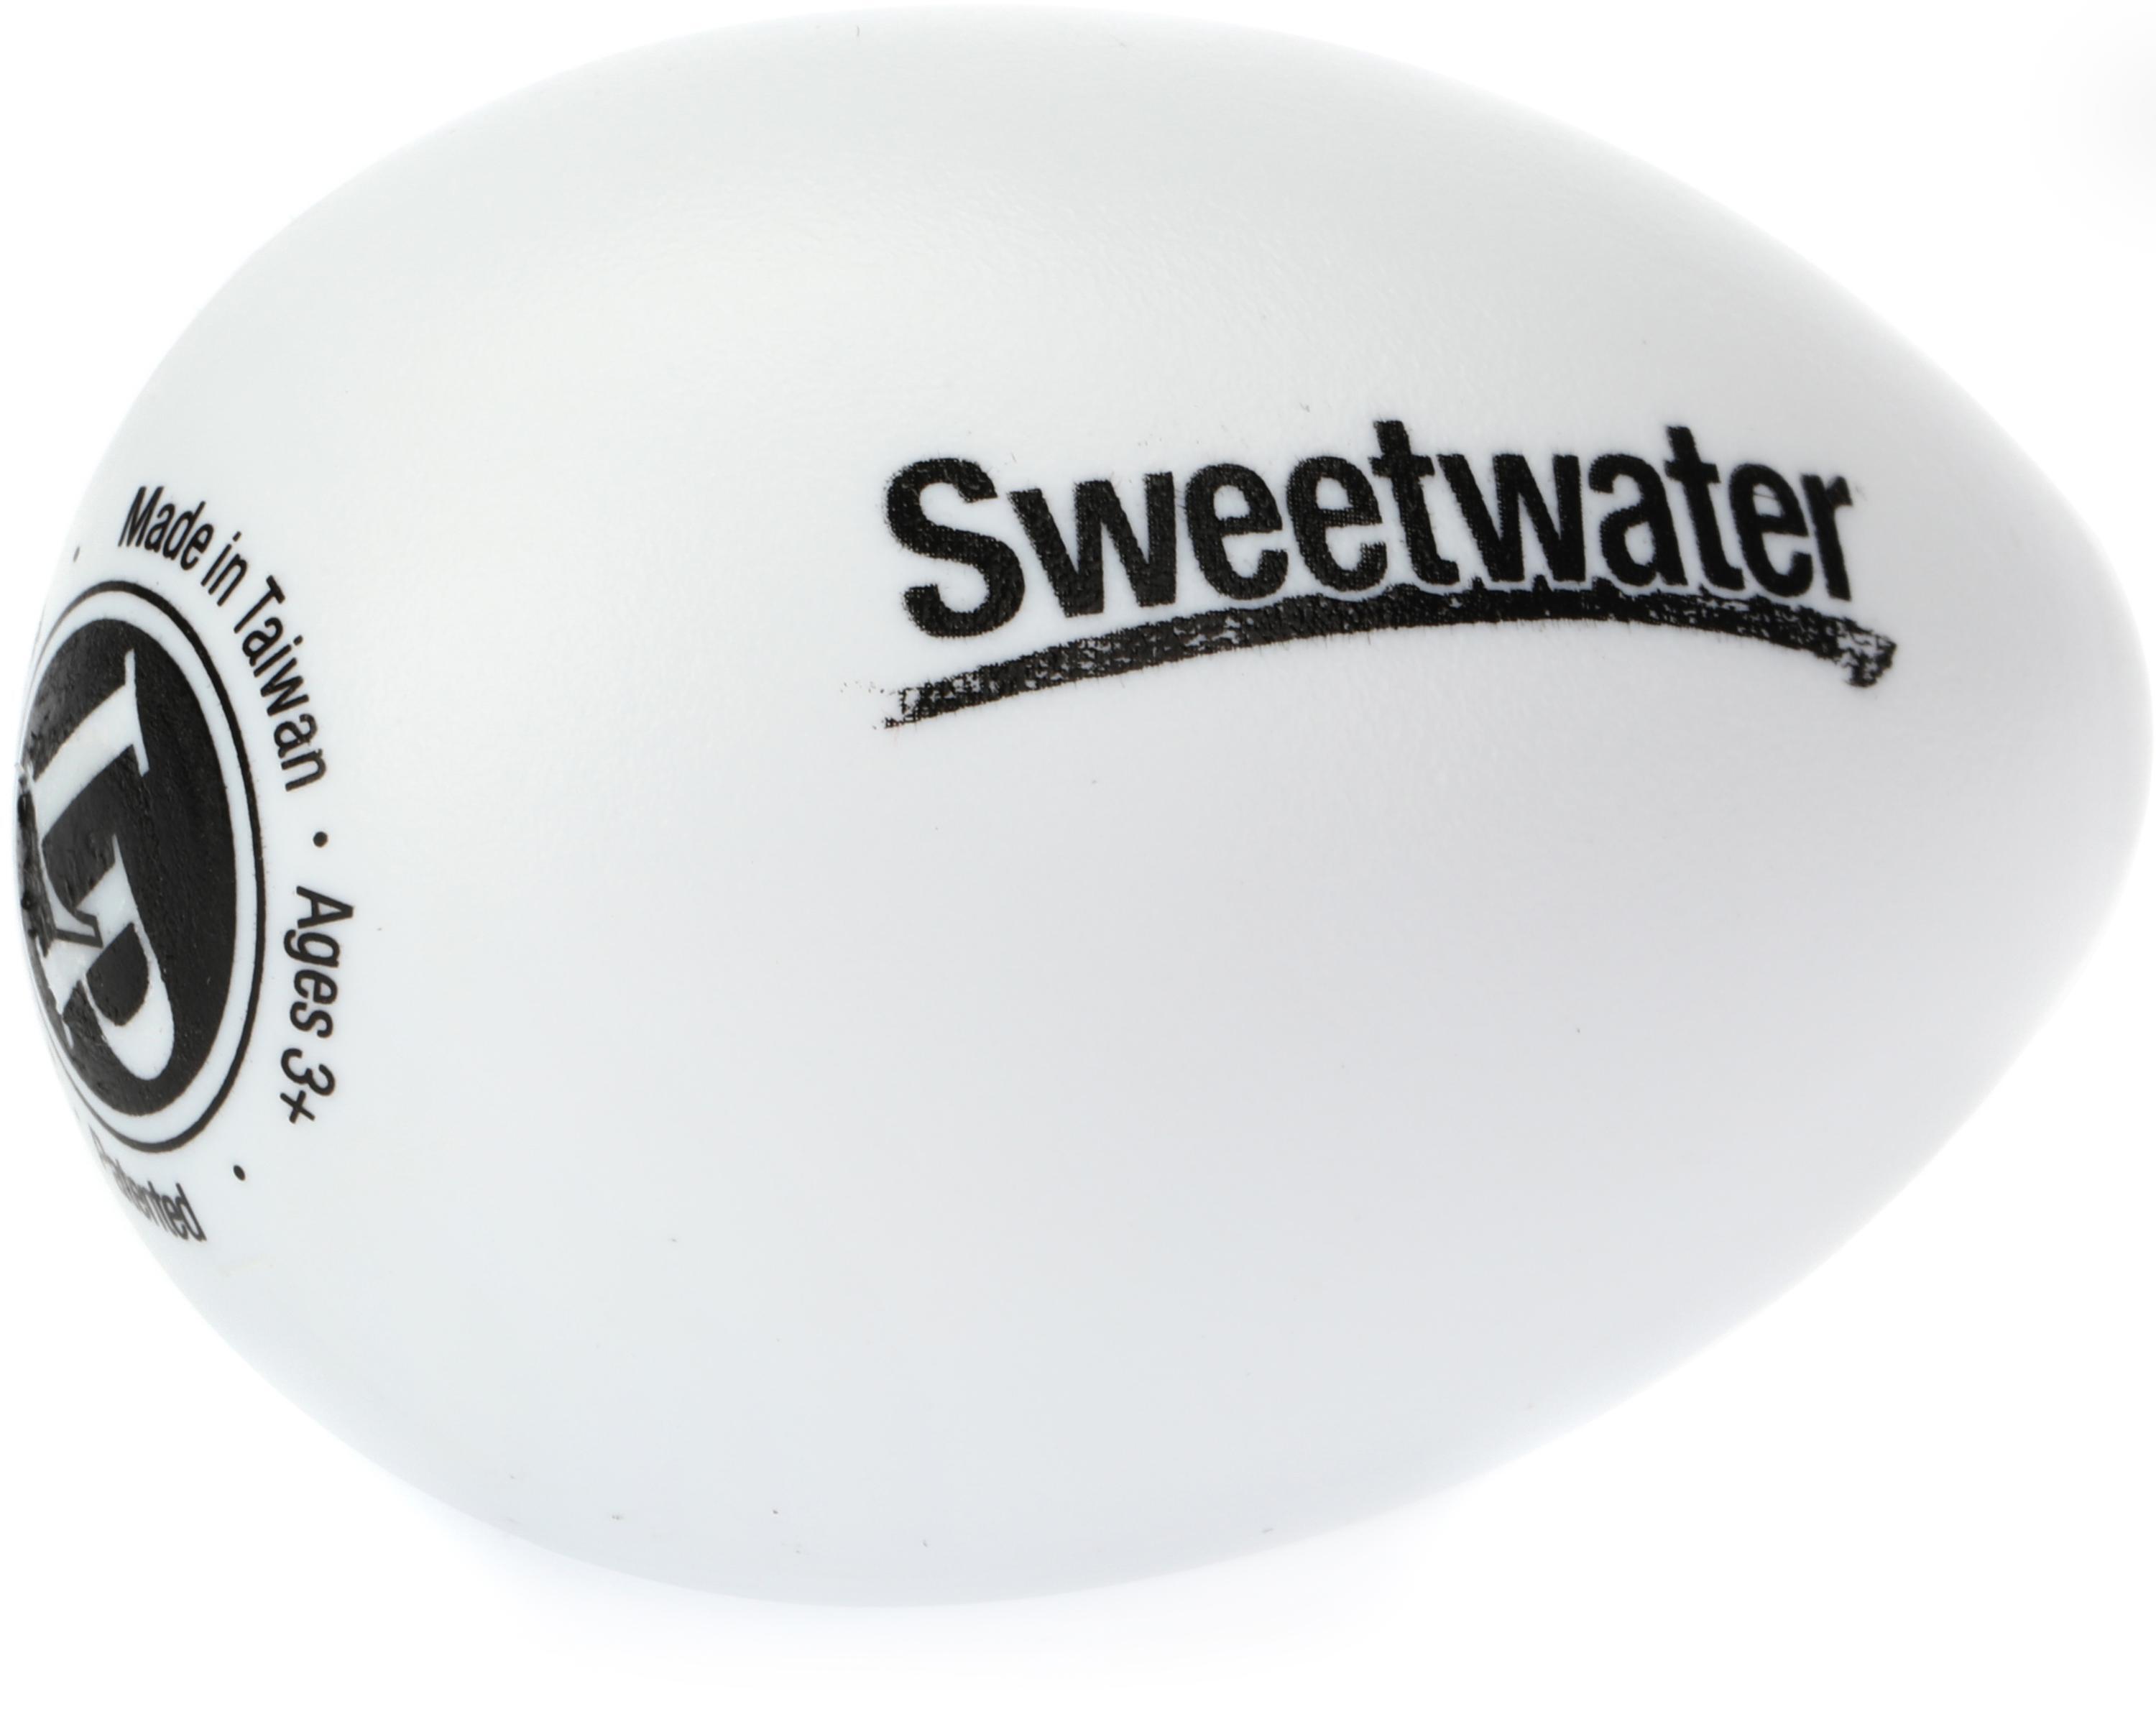 Bundled Item: Latin Percussion Sweetwater Egg Shaker - White